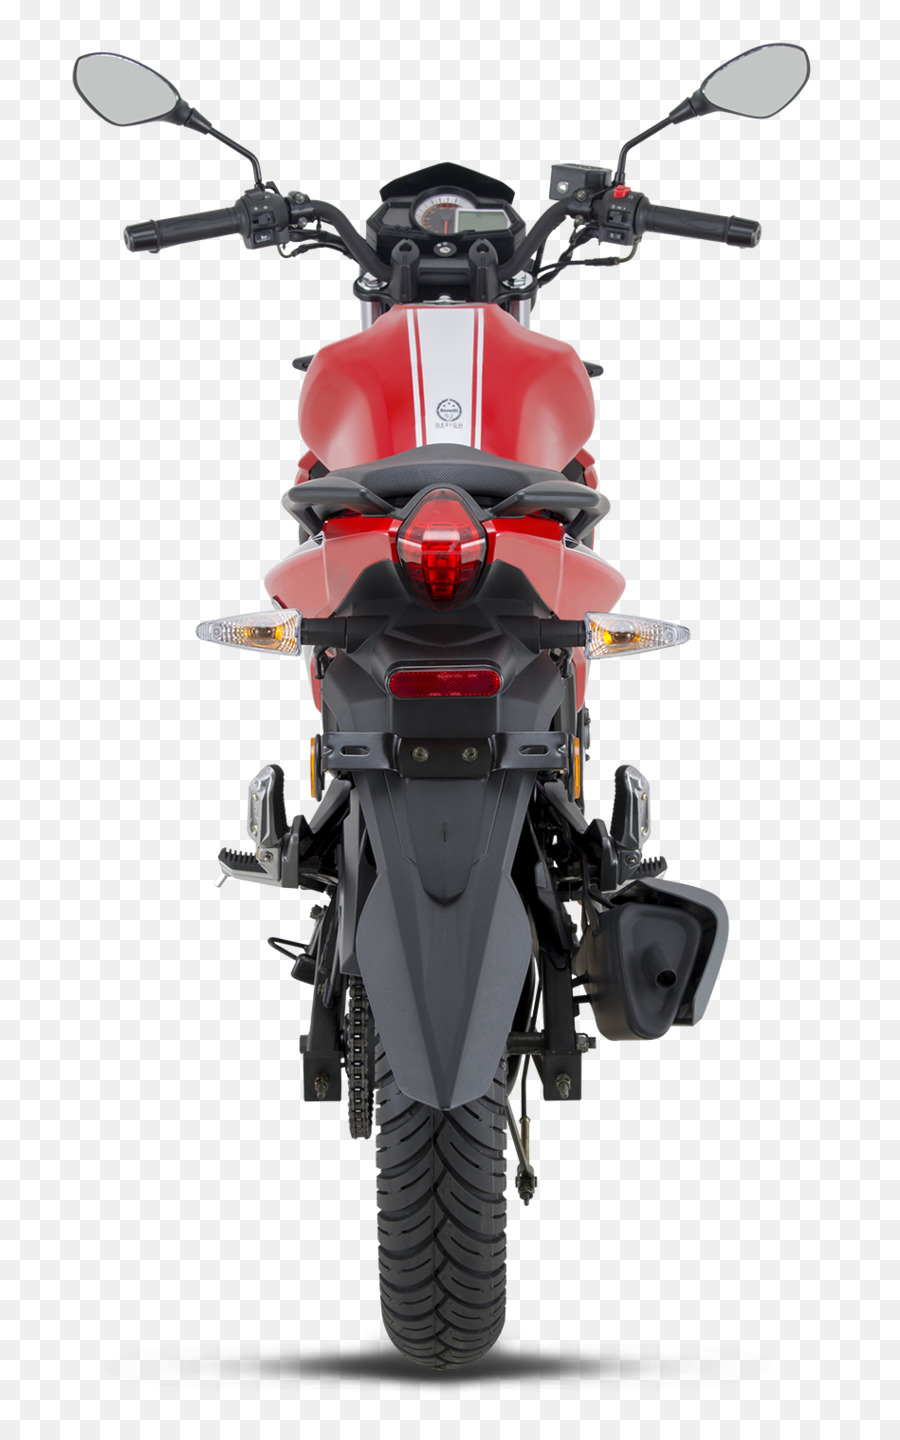 Scooter，Triunfo Motocicletas Ltda PNG